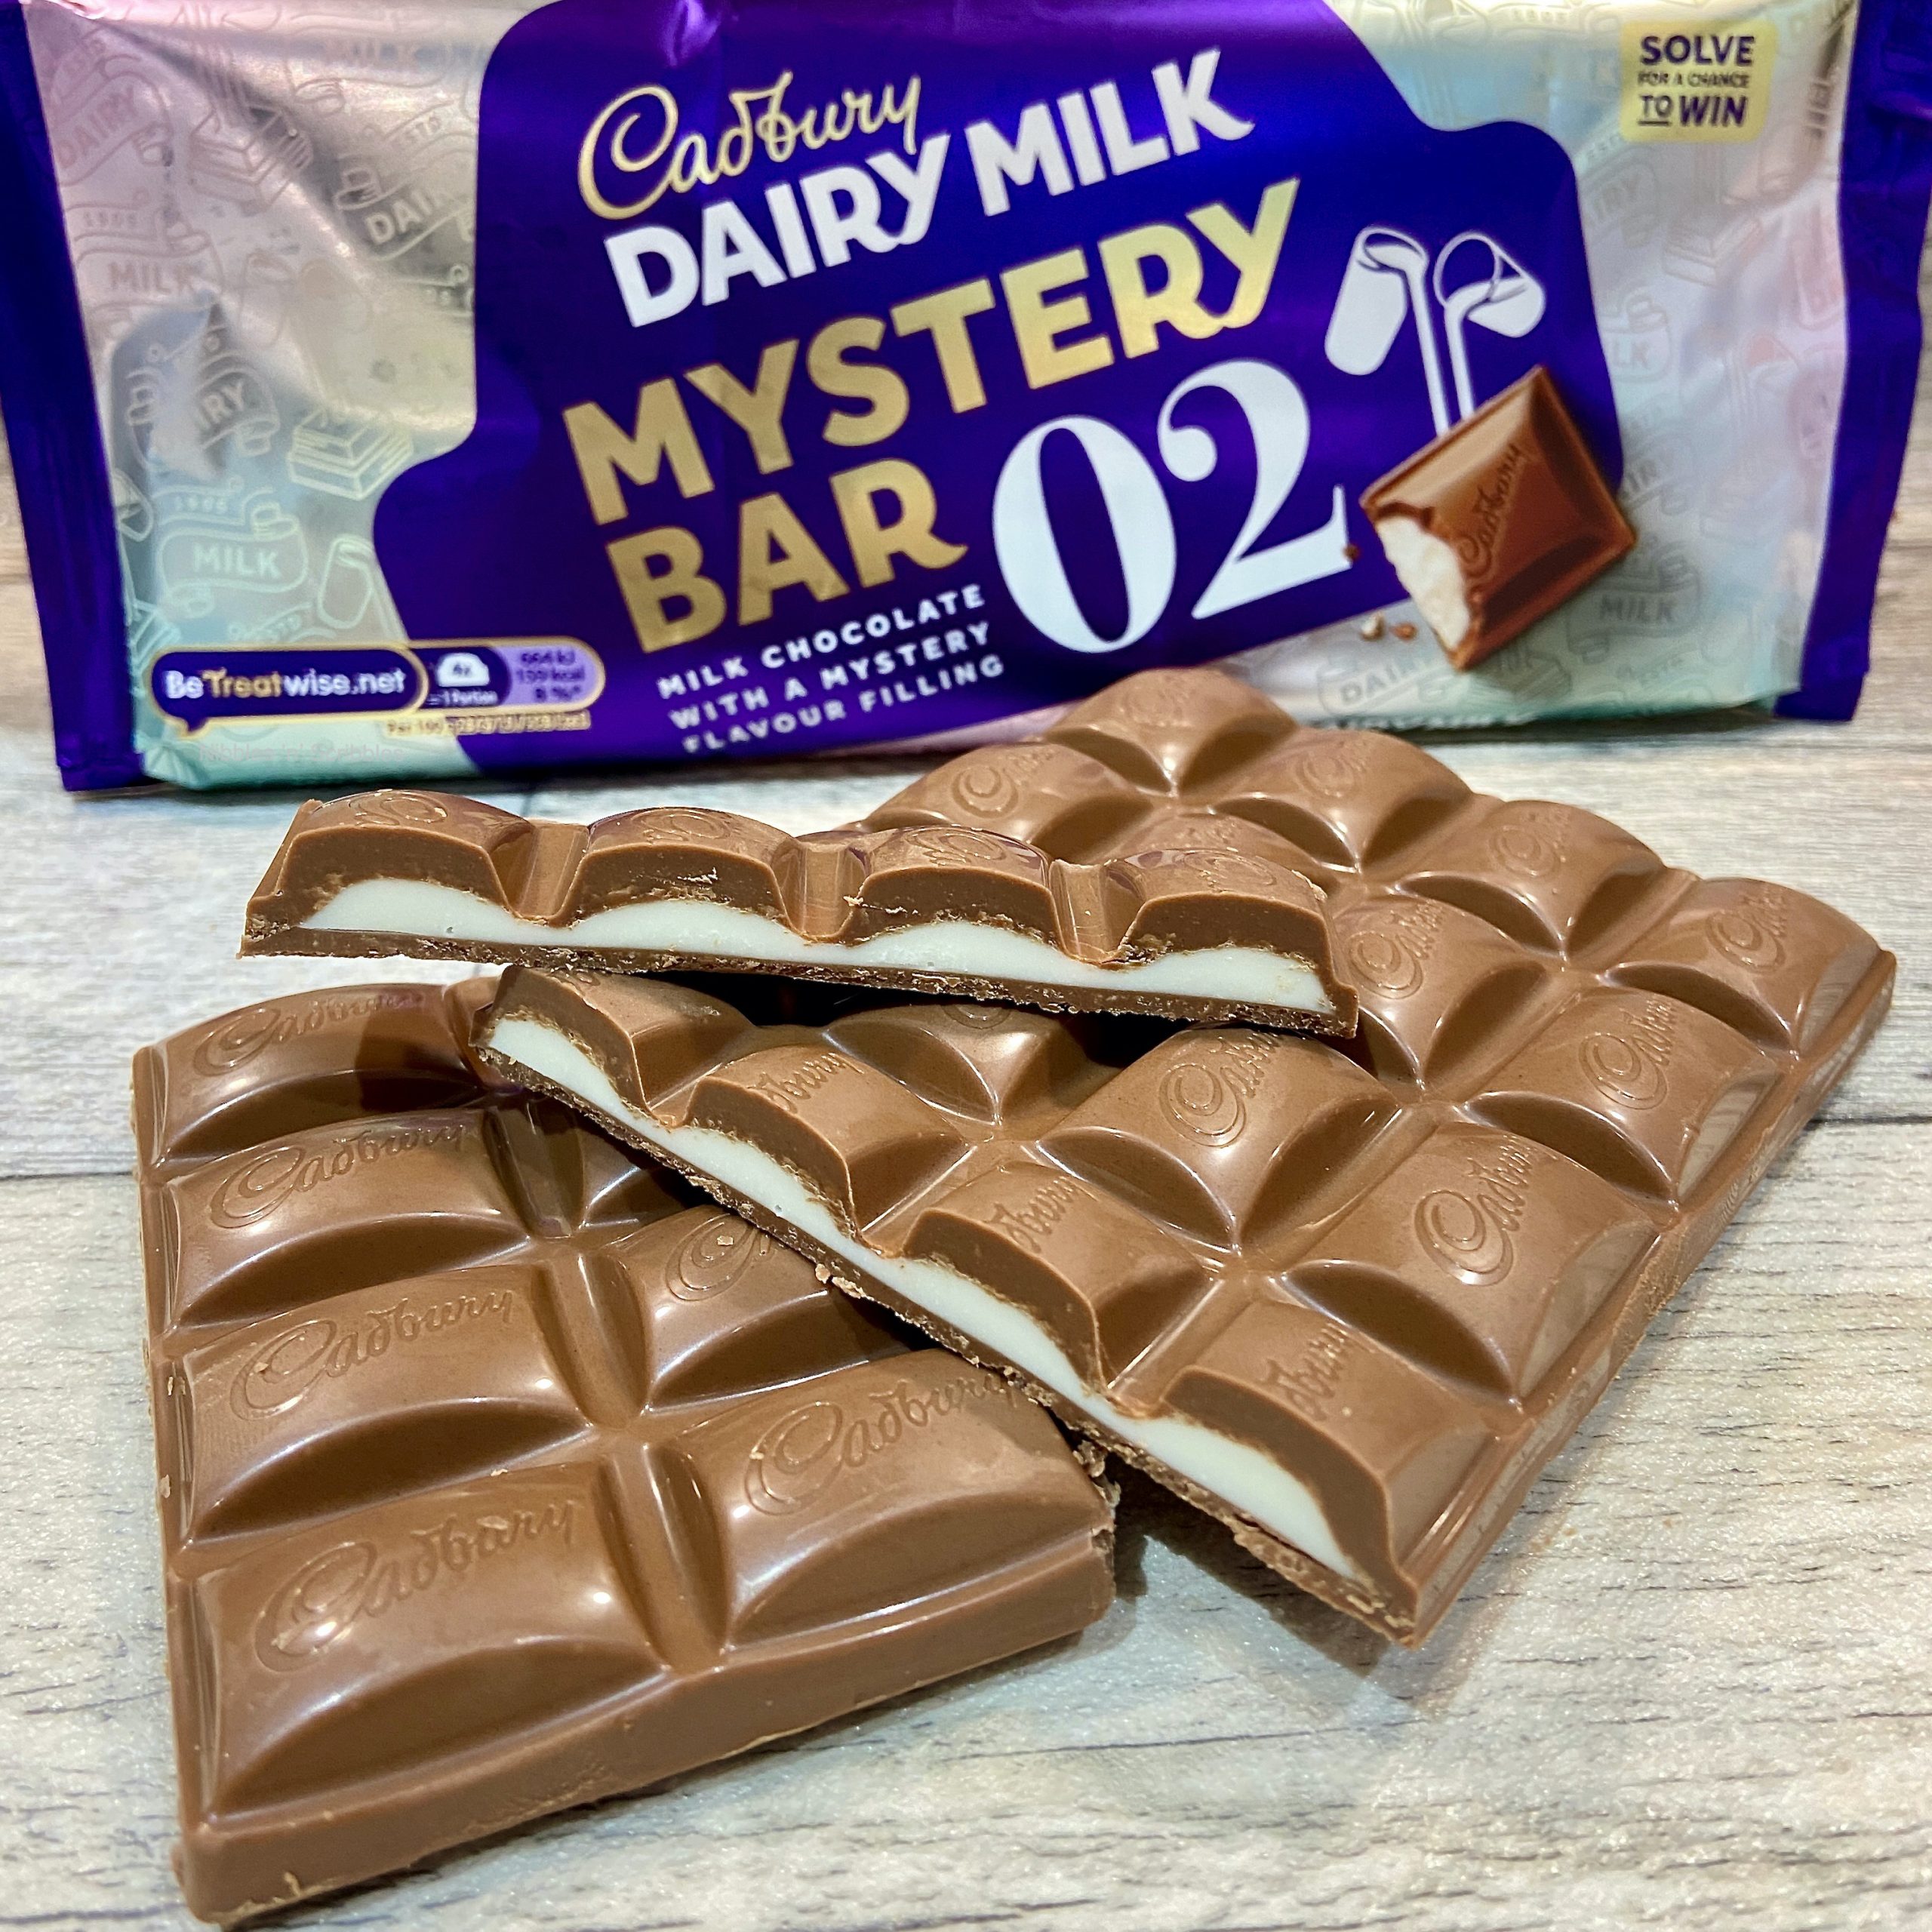 Cadbury Dairy Milk Mystery Bar 02 Review